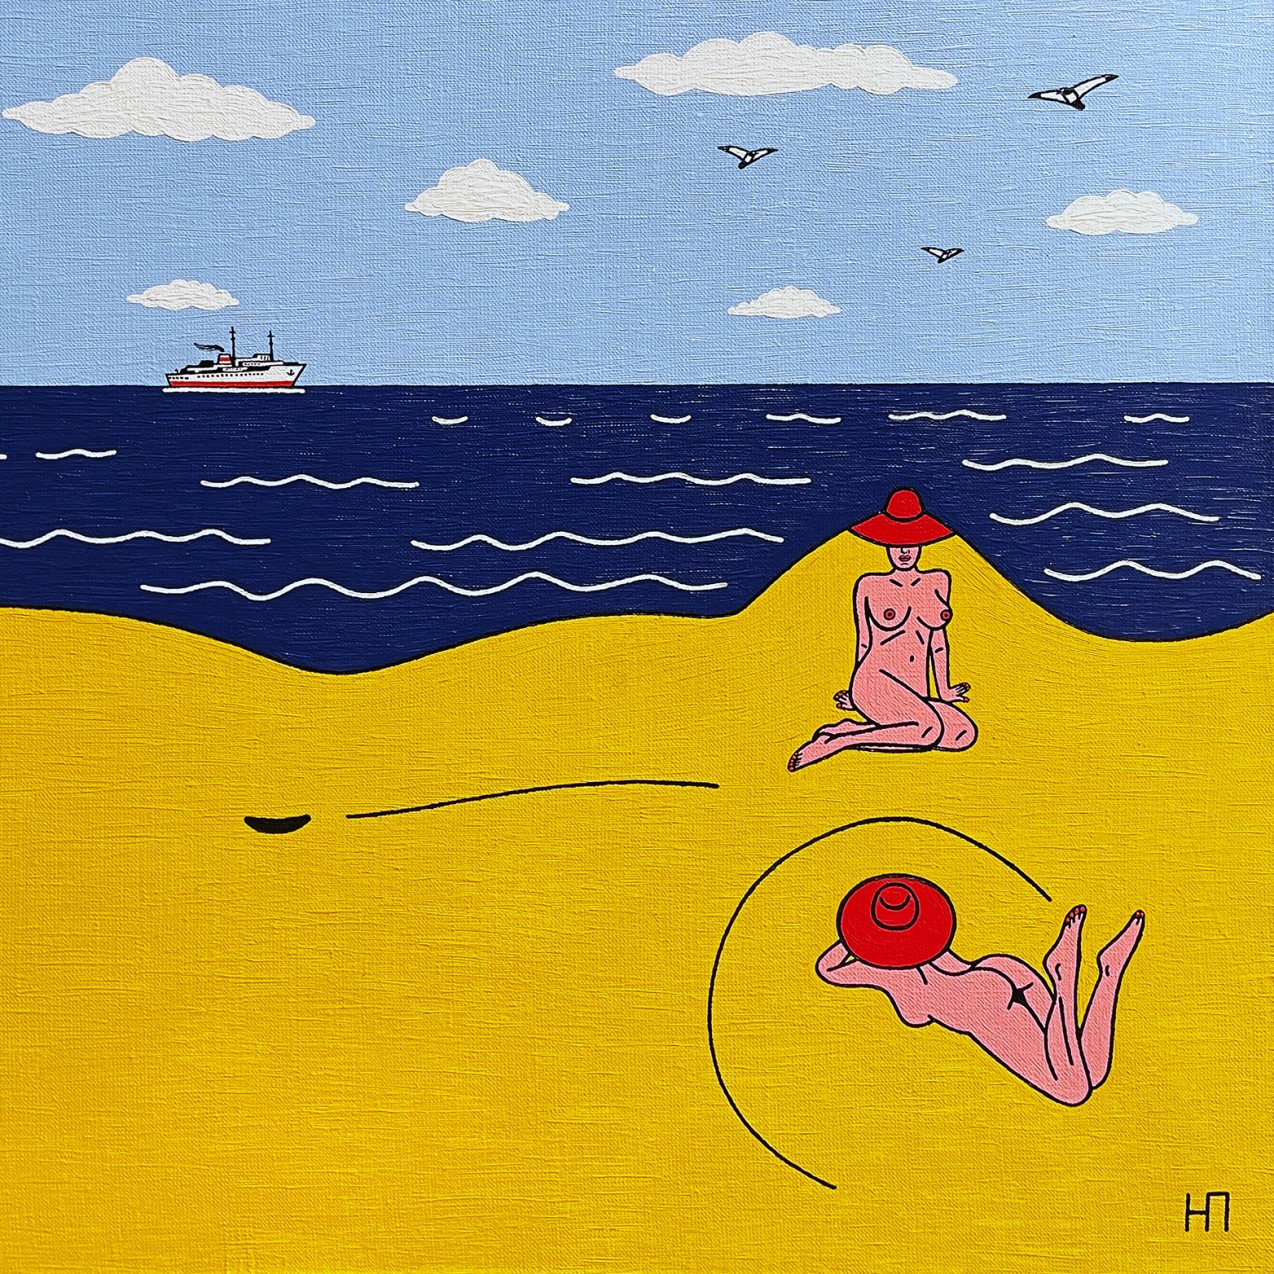 Петр Наводнюк — Две женщины в шляпах на пляже, 2009 (холст, масло)